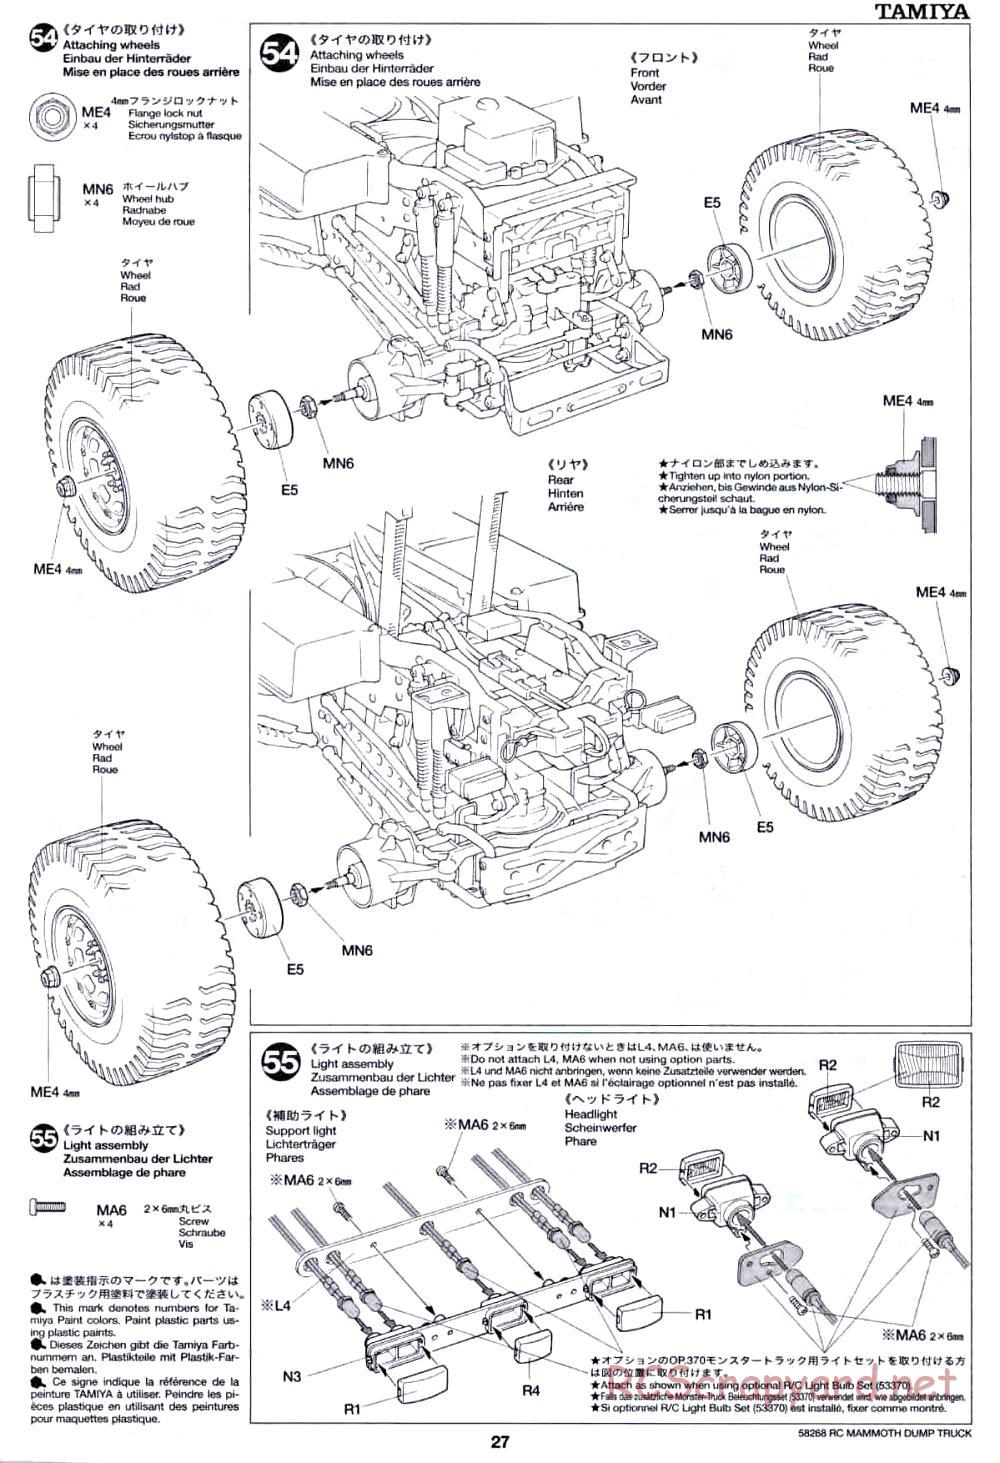 Tamiya - Mammoth Dump Truck Chassis - Manual - Page 27